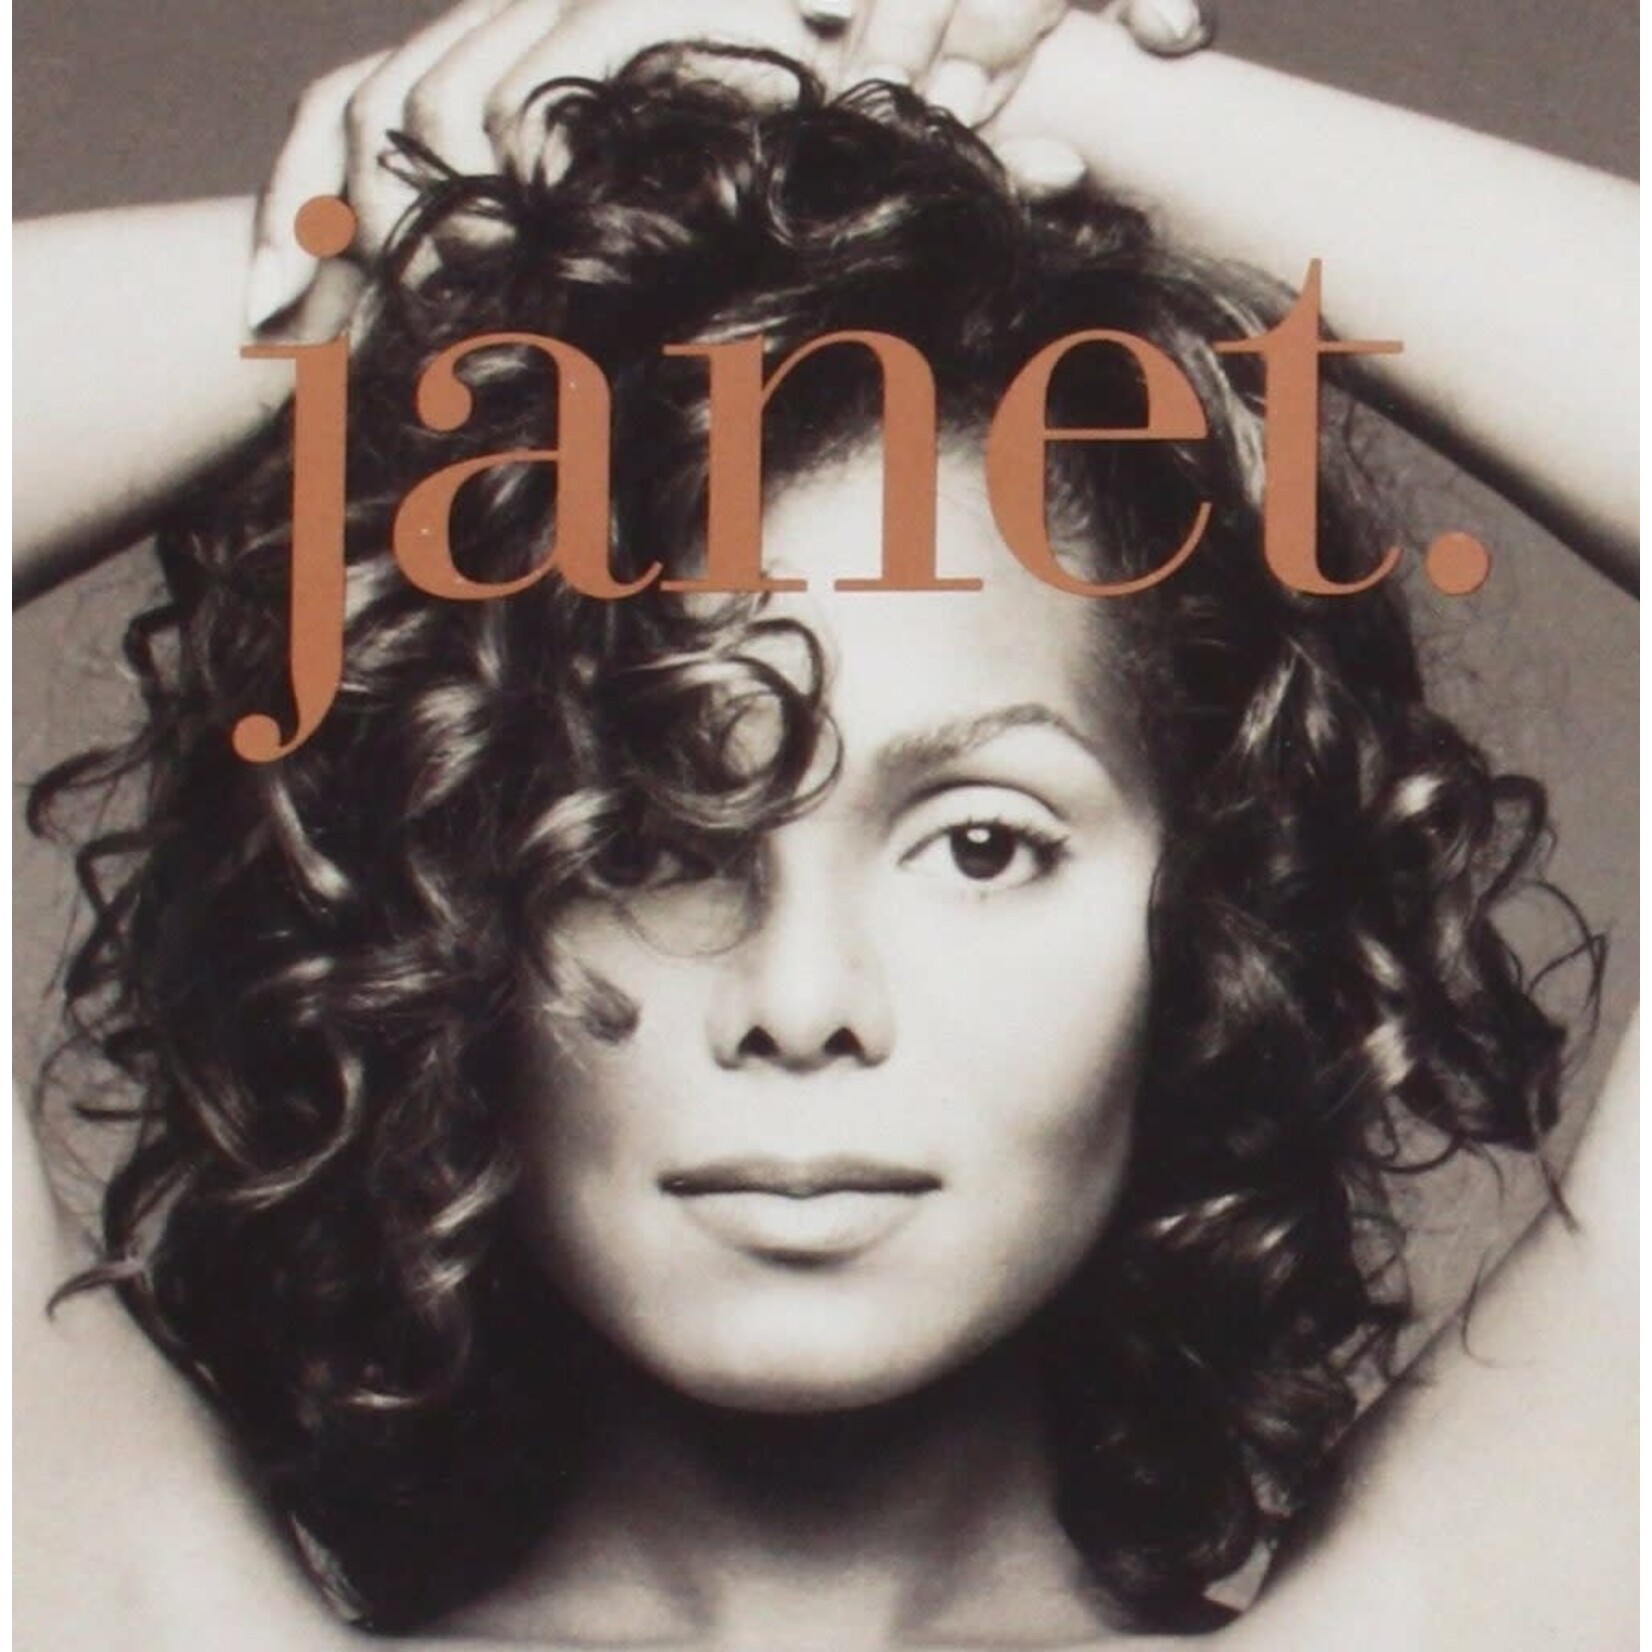 [New] Jackson, Janet: Janet. (3LP, 30th Anniversary, black vinyl w/bonus tracks) [UME]